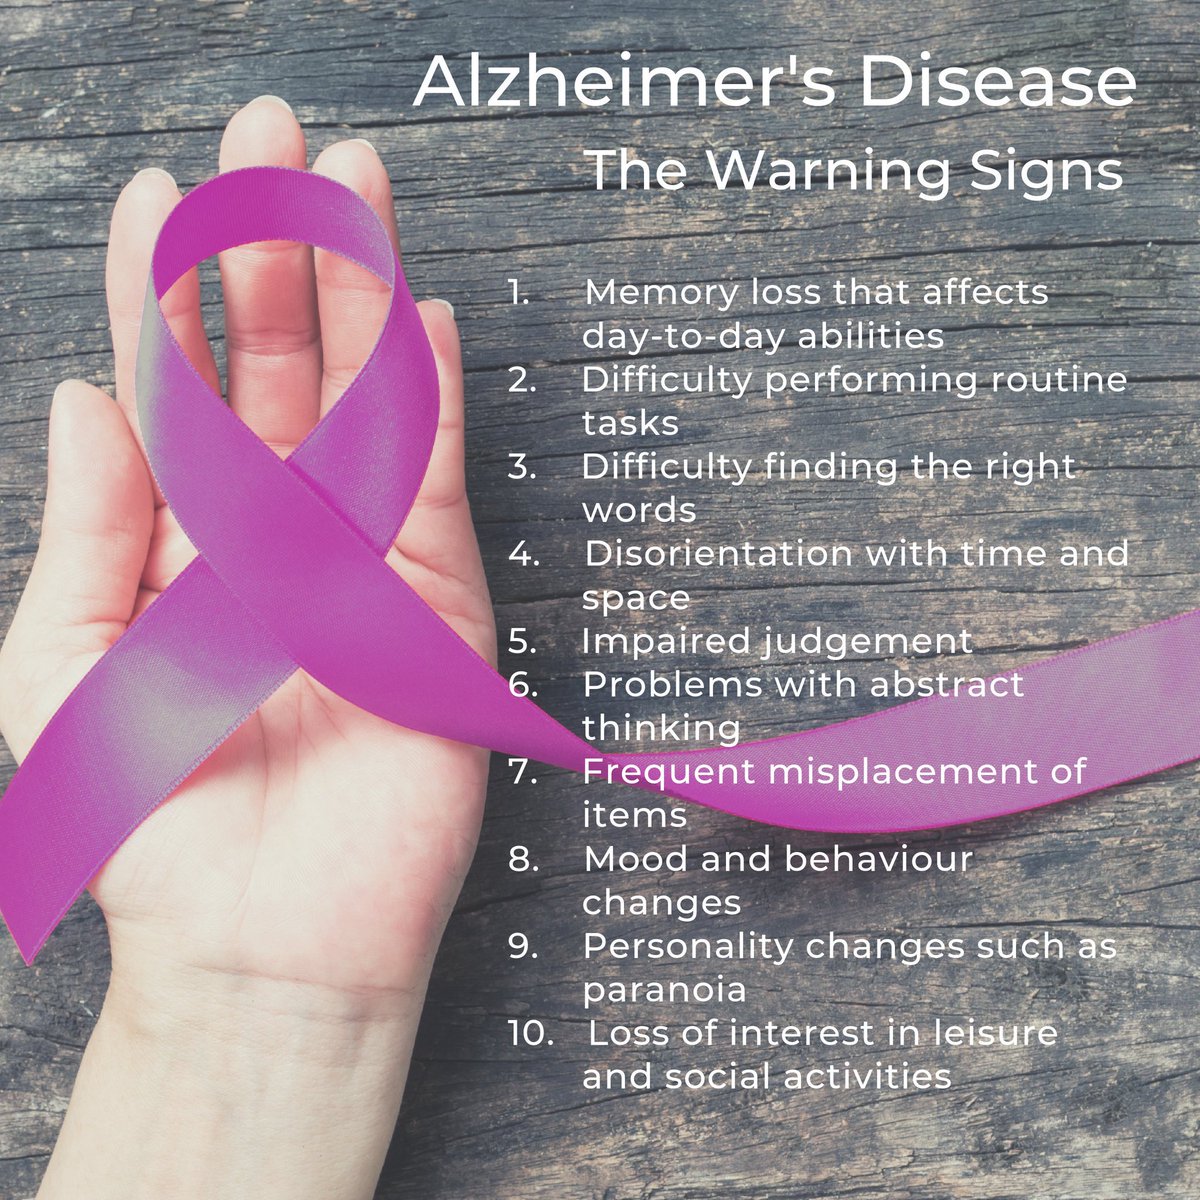 10 warning signs of #Alzheimers disease #dementia